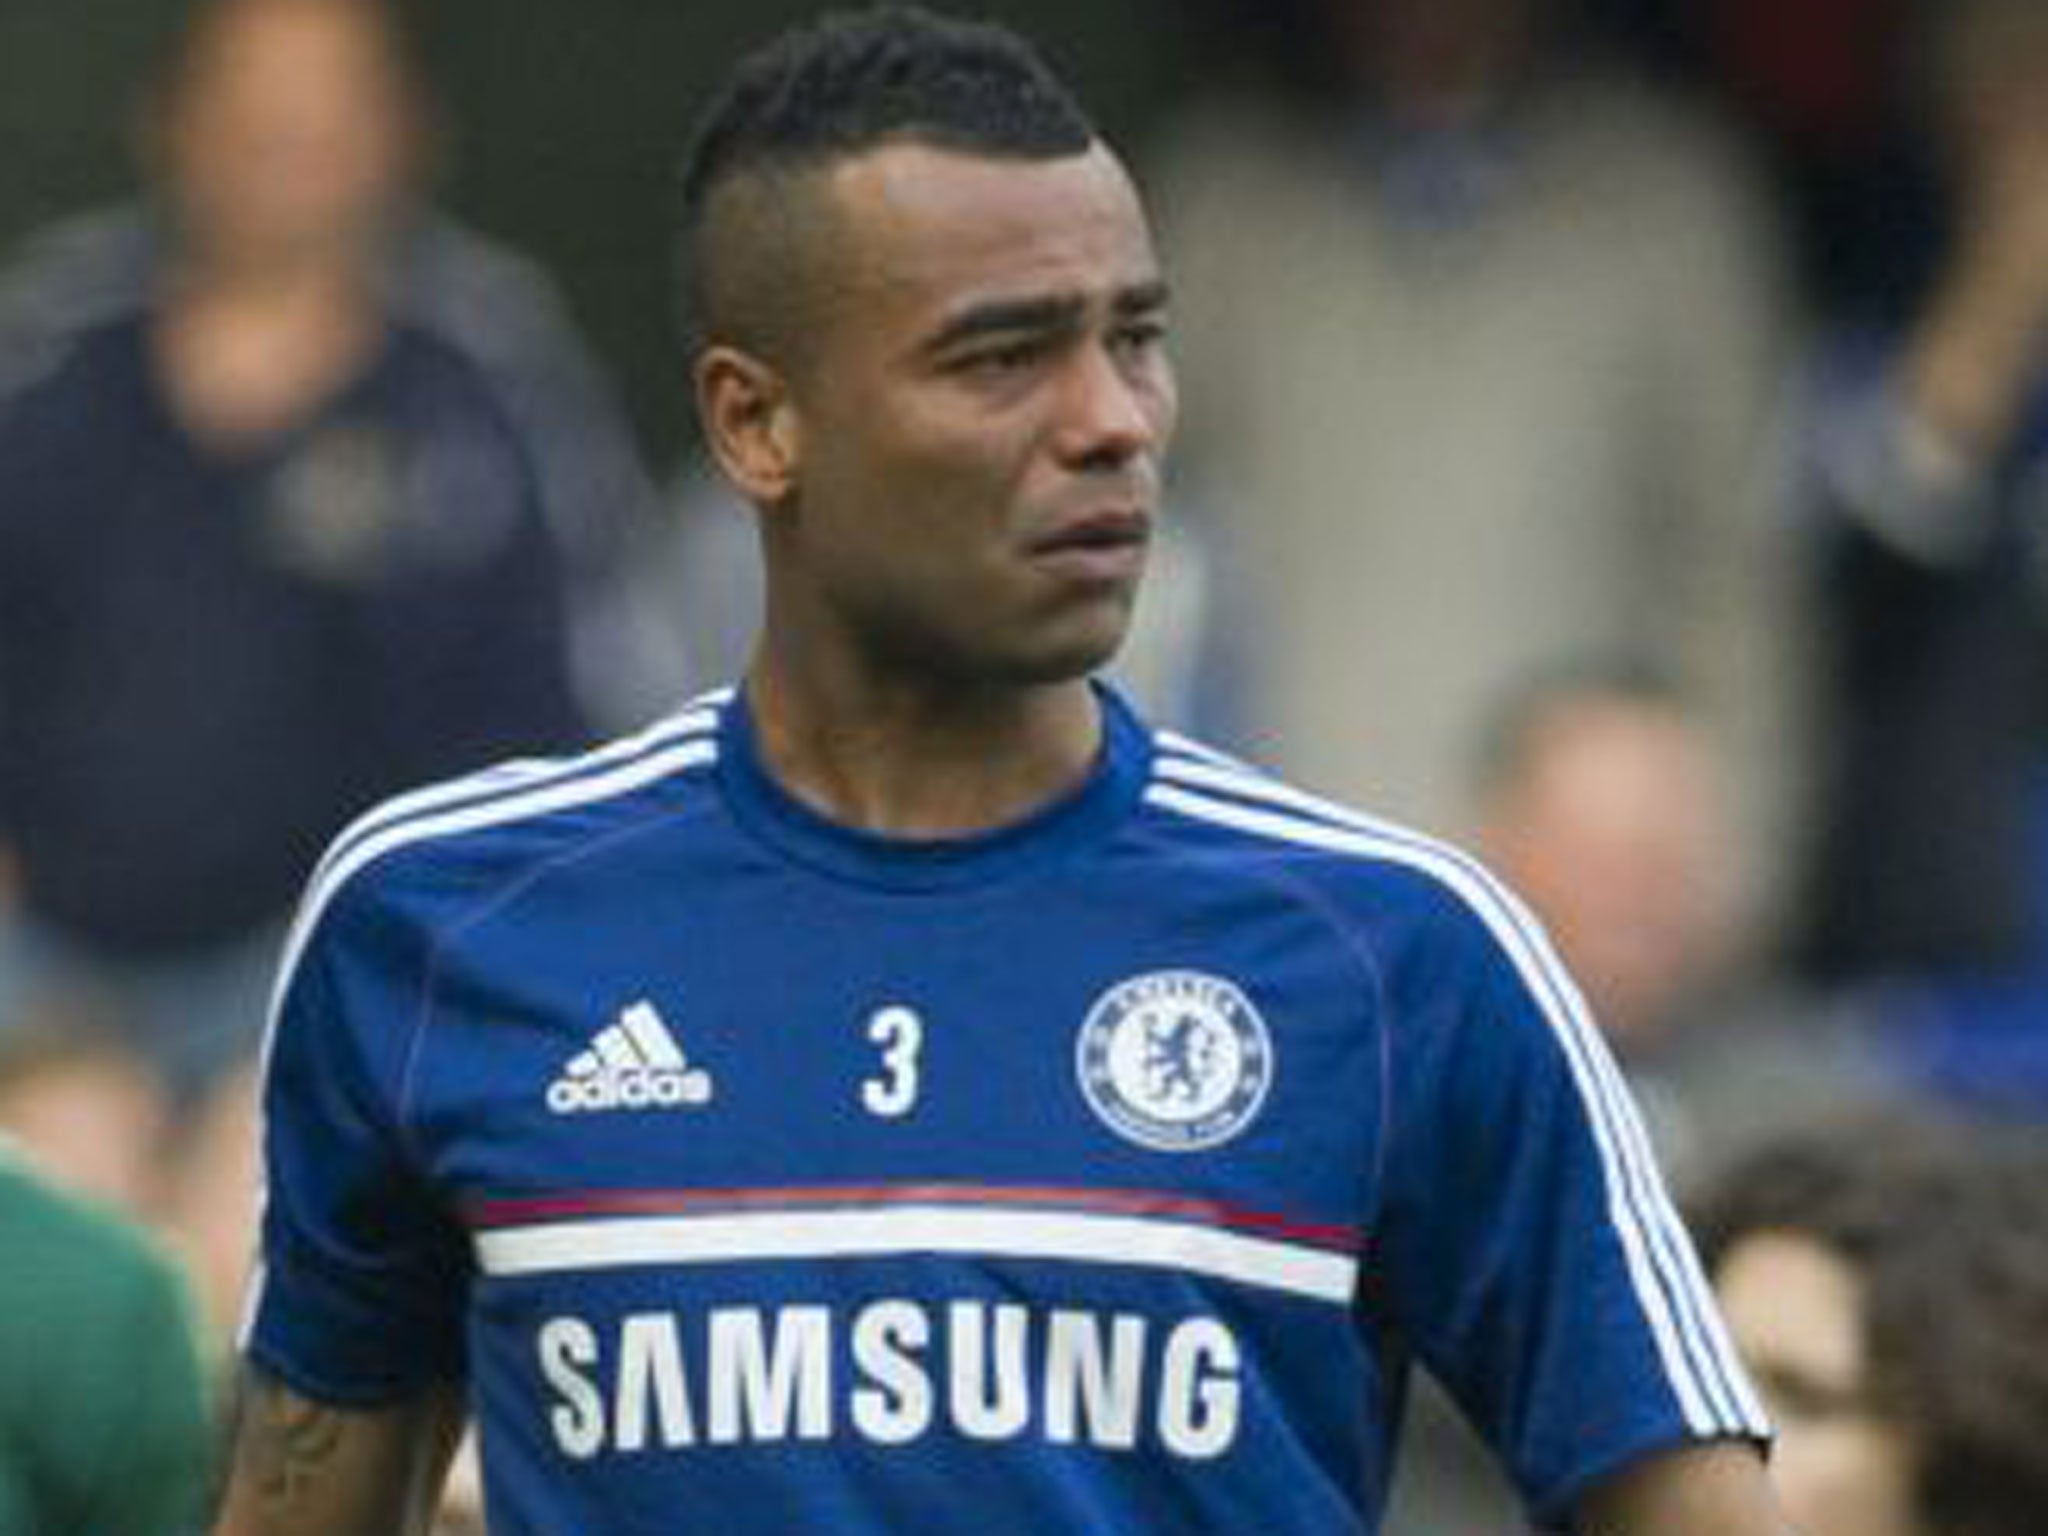 Ashley Cole looks devastated as he walks around the Stamford Bridge pitch on Sunday